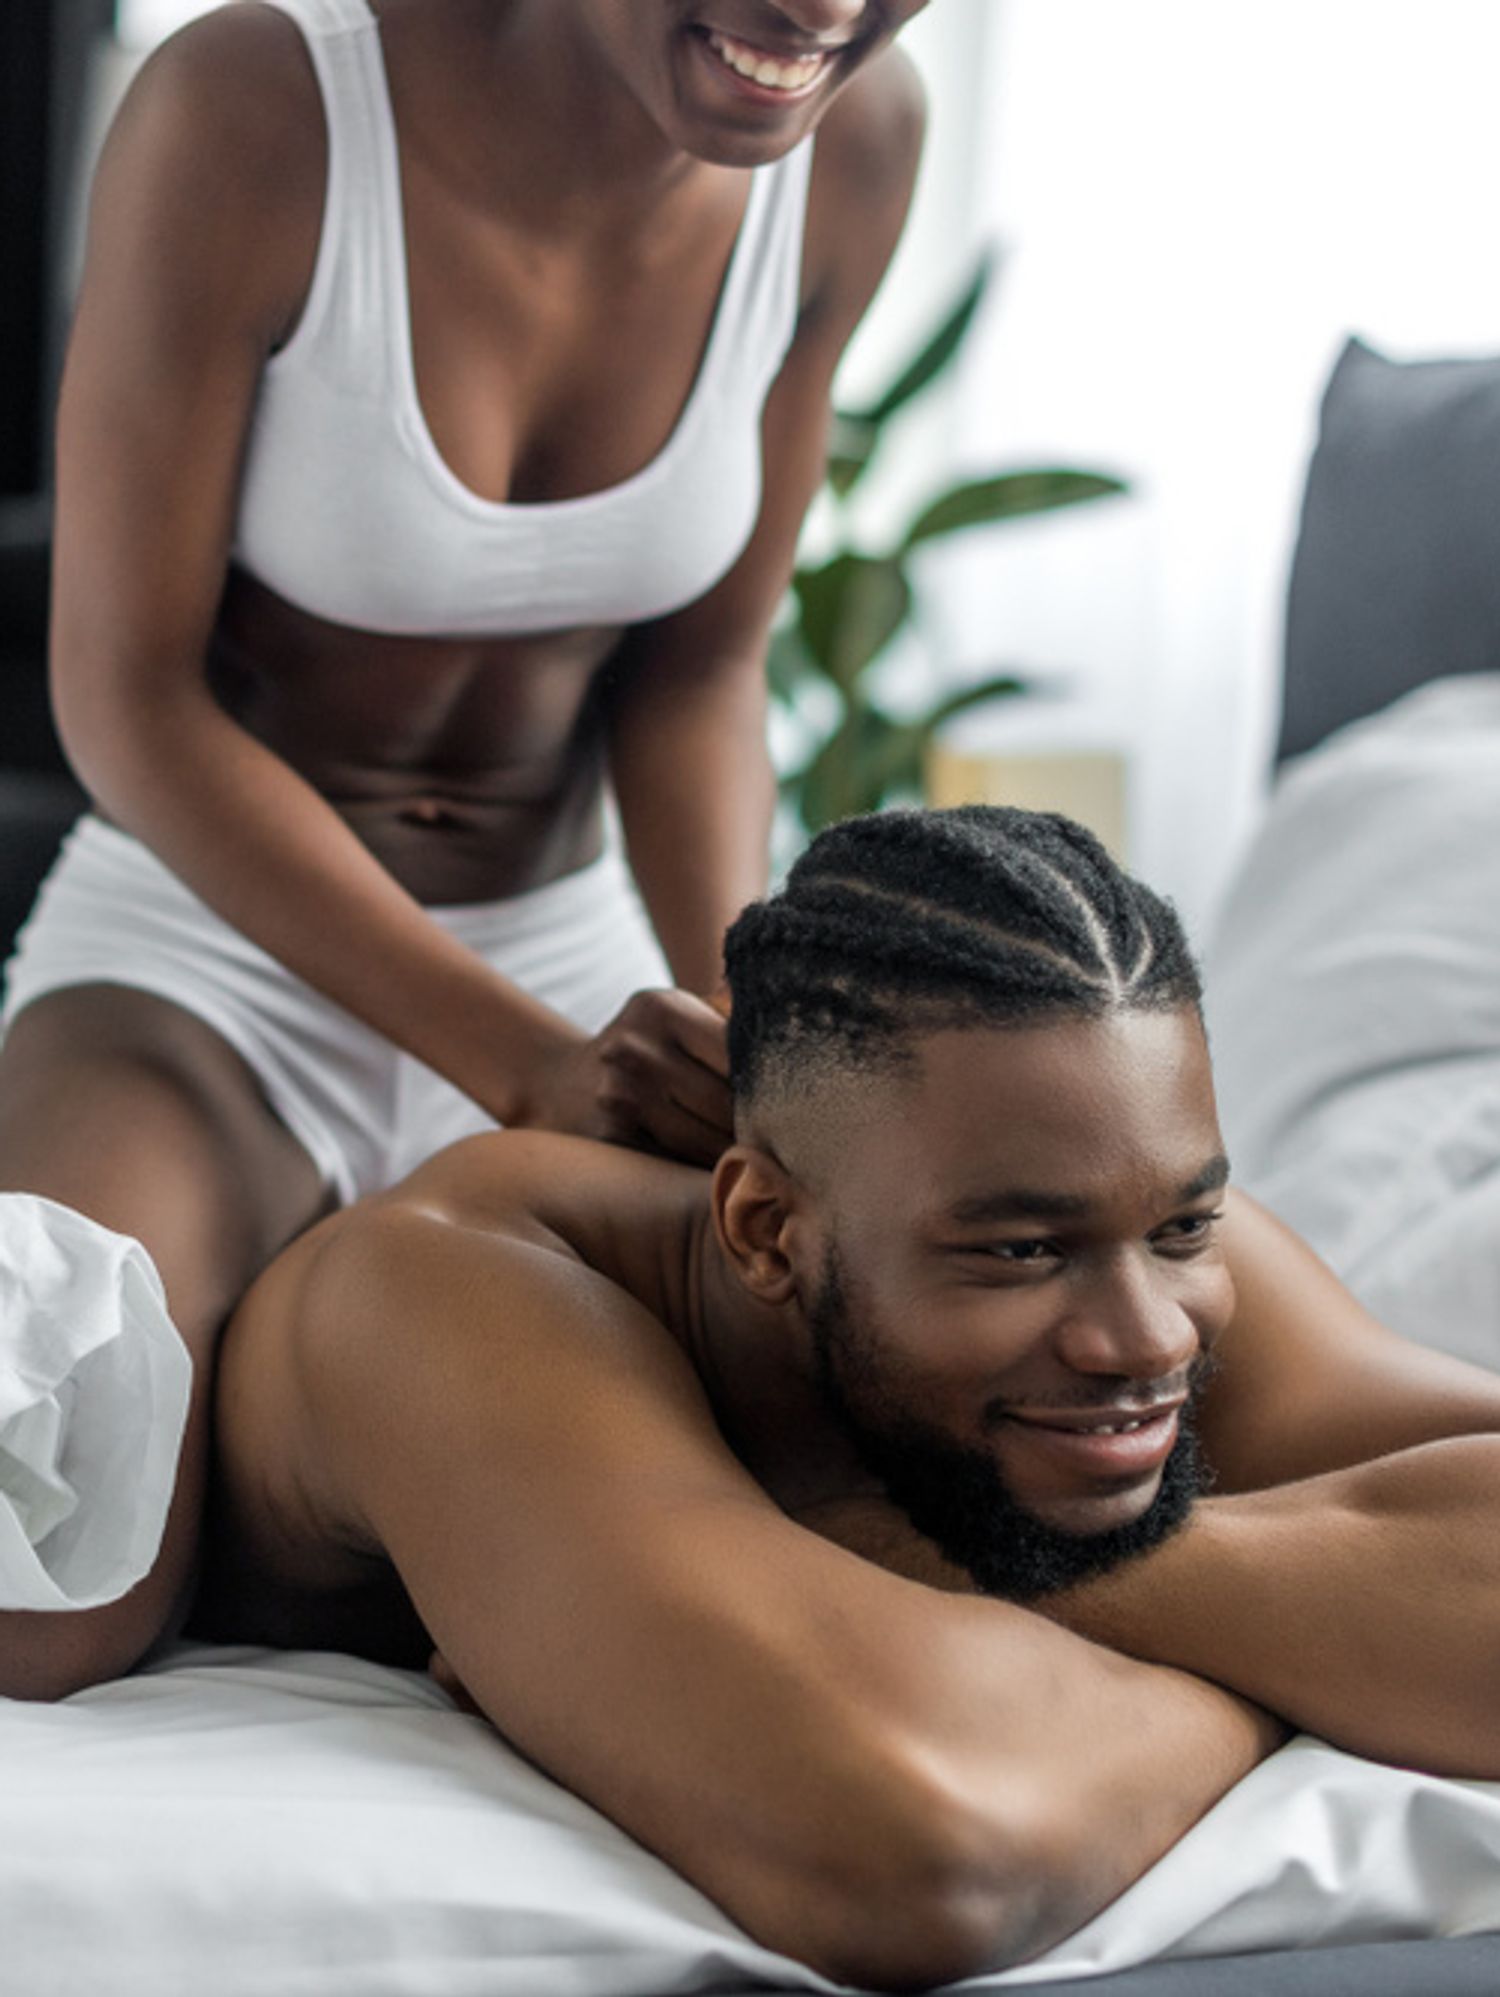 Erotic zones to massage on human body